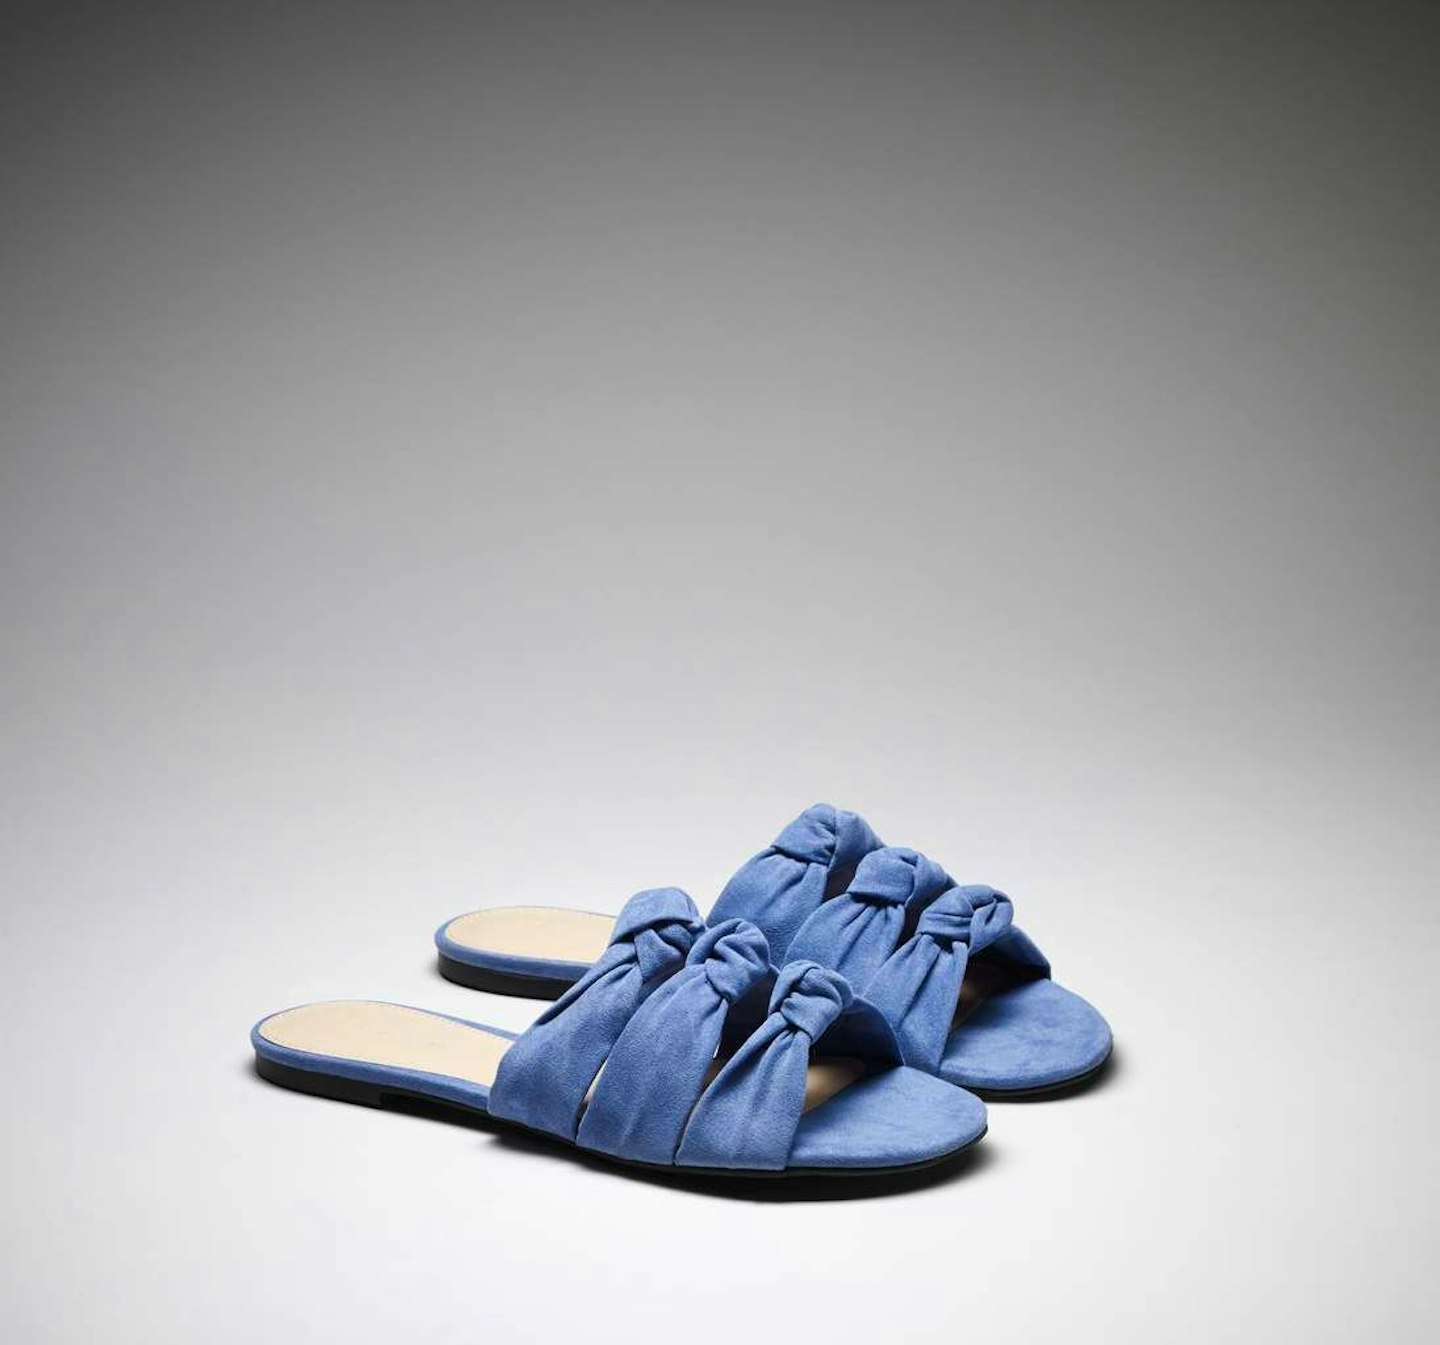 blue-sandals-fashion-summer